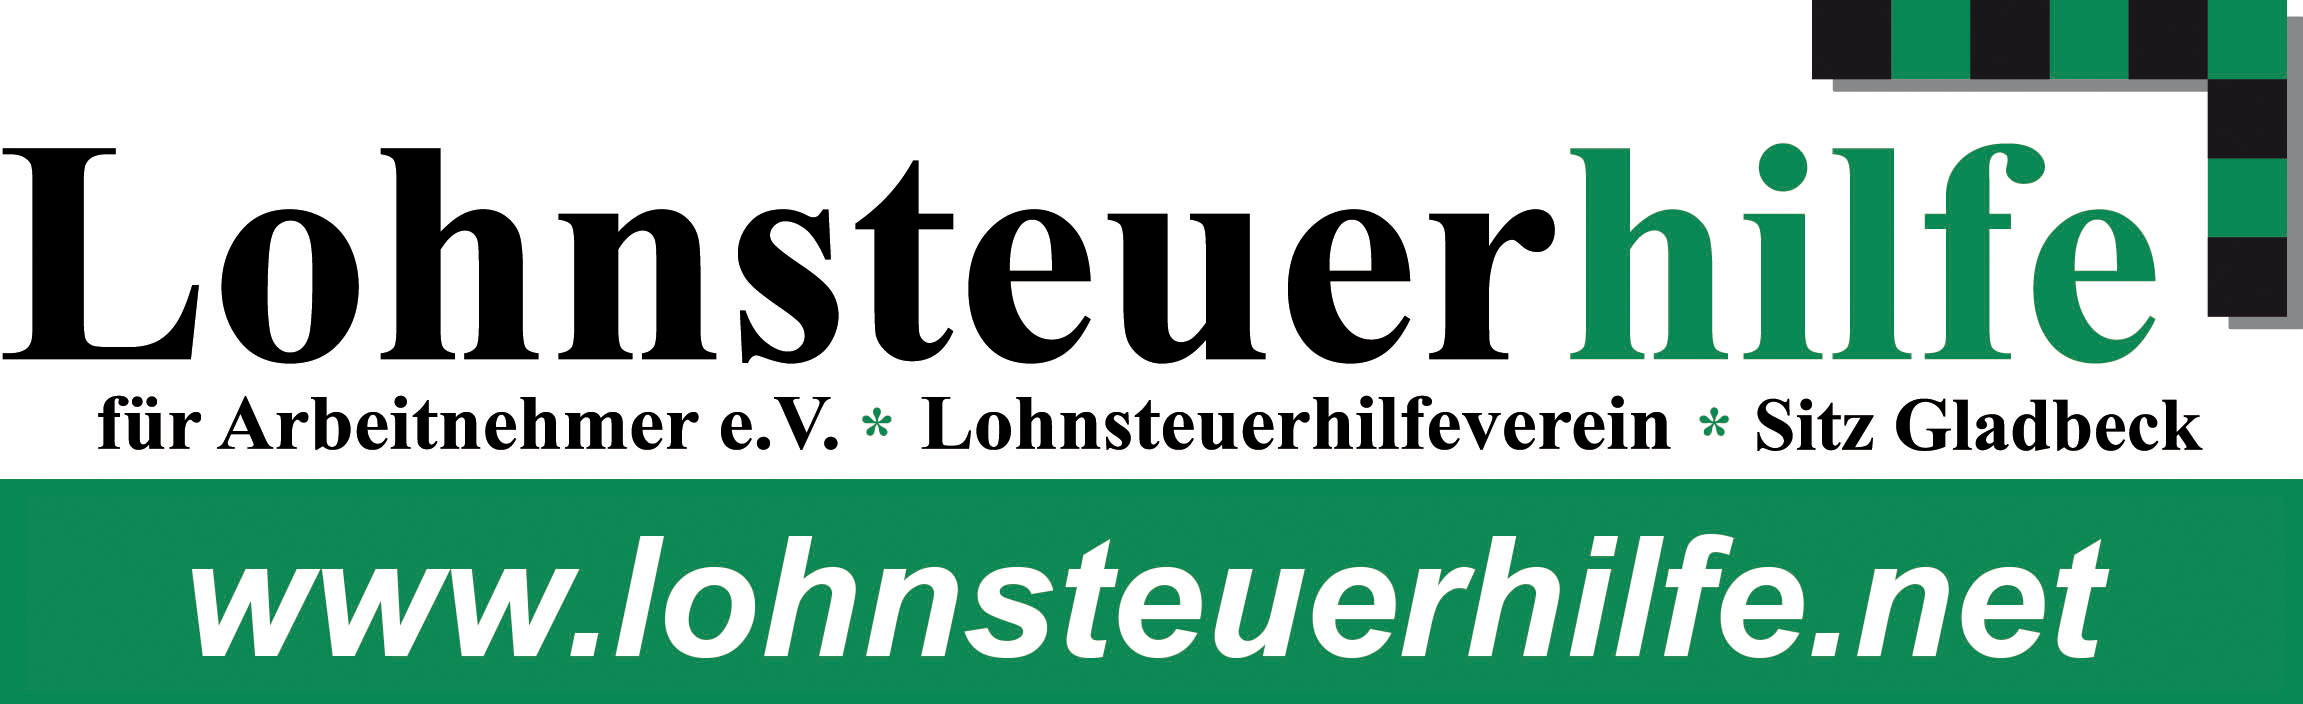 job2247 - Lohnsteuerhilfeverein Logo